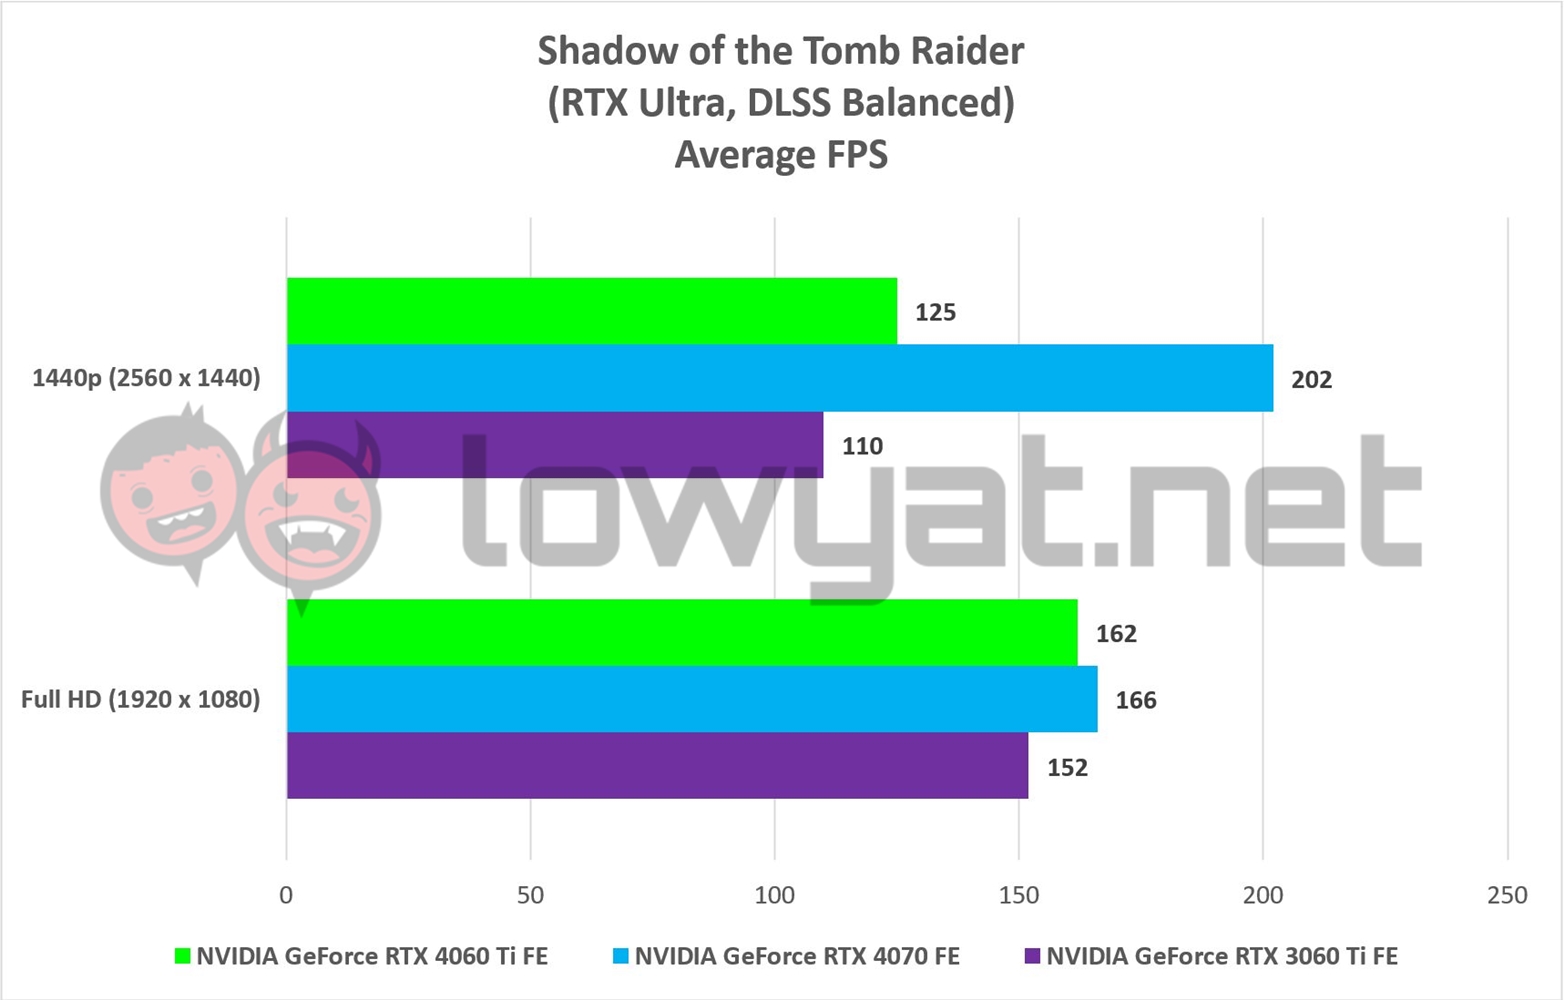 Digital Foundry] Nvidia GeForce RTX 4060 Review vs RTX 3060 vs  PlayStation 5? : r/nvidia